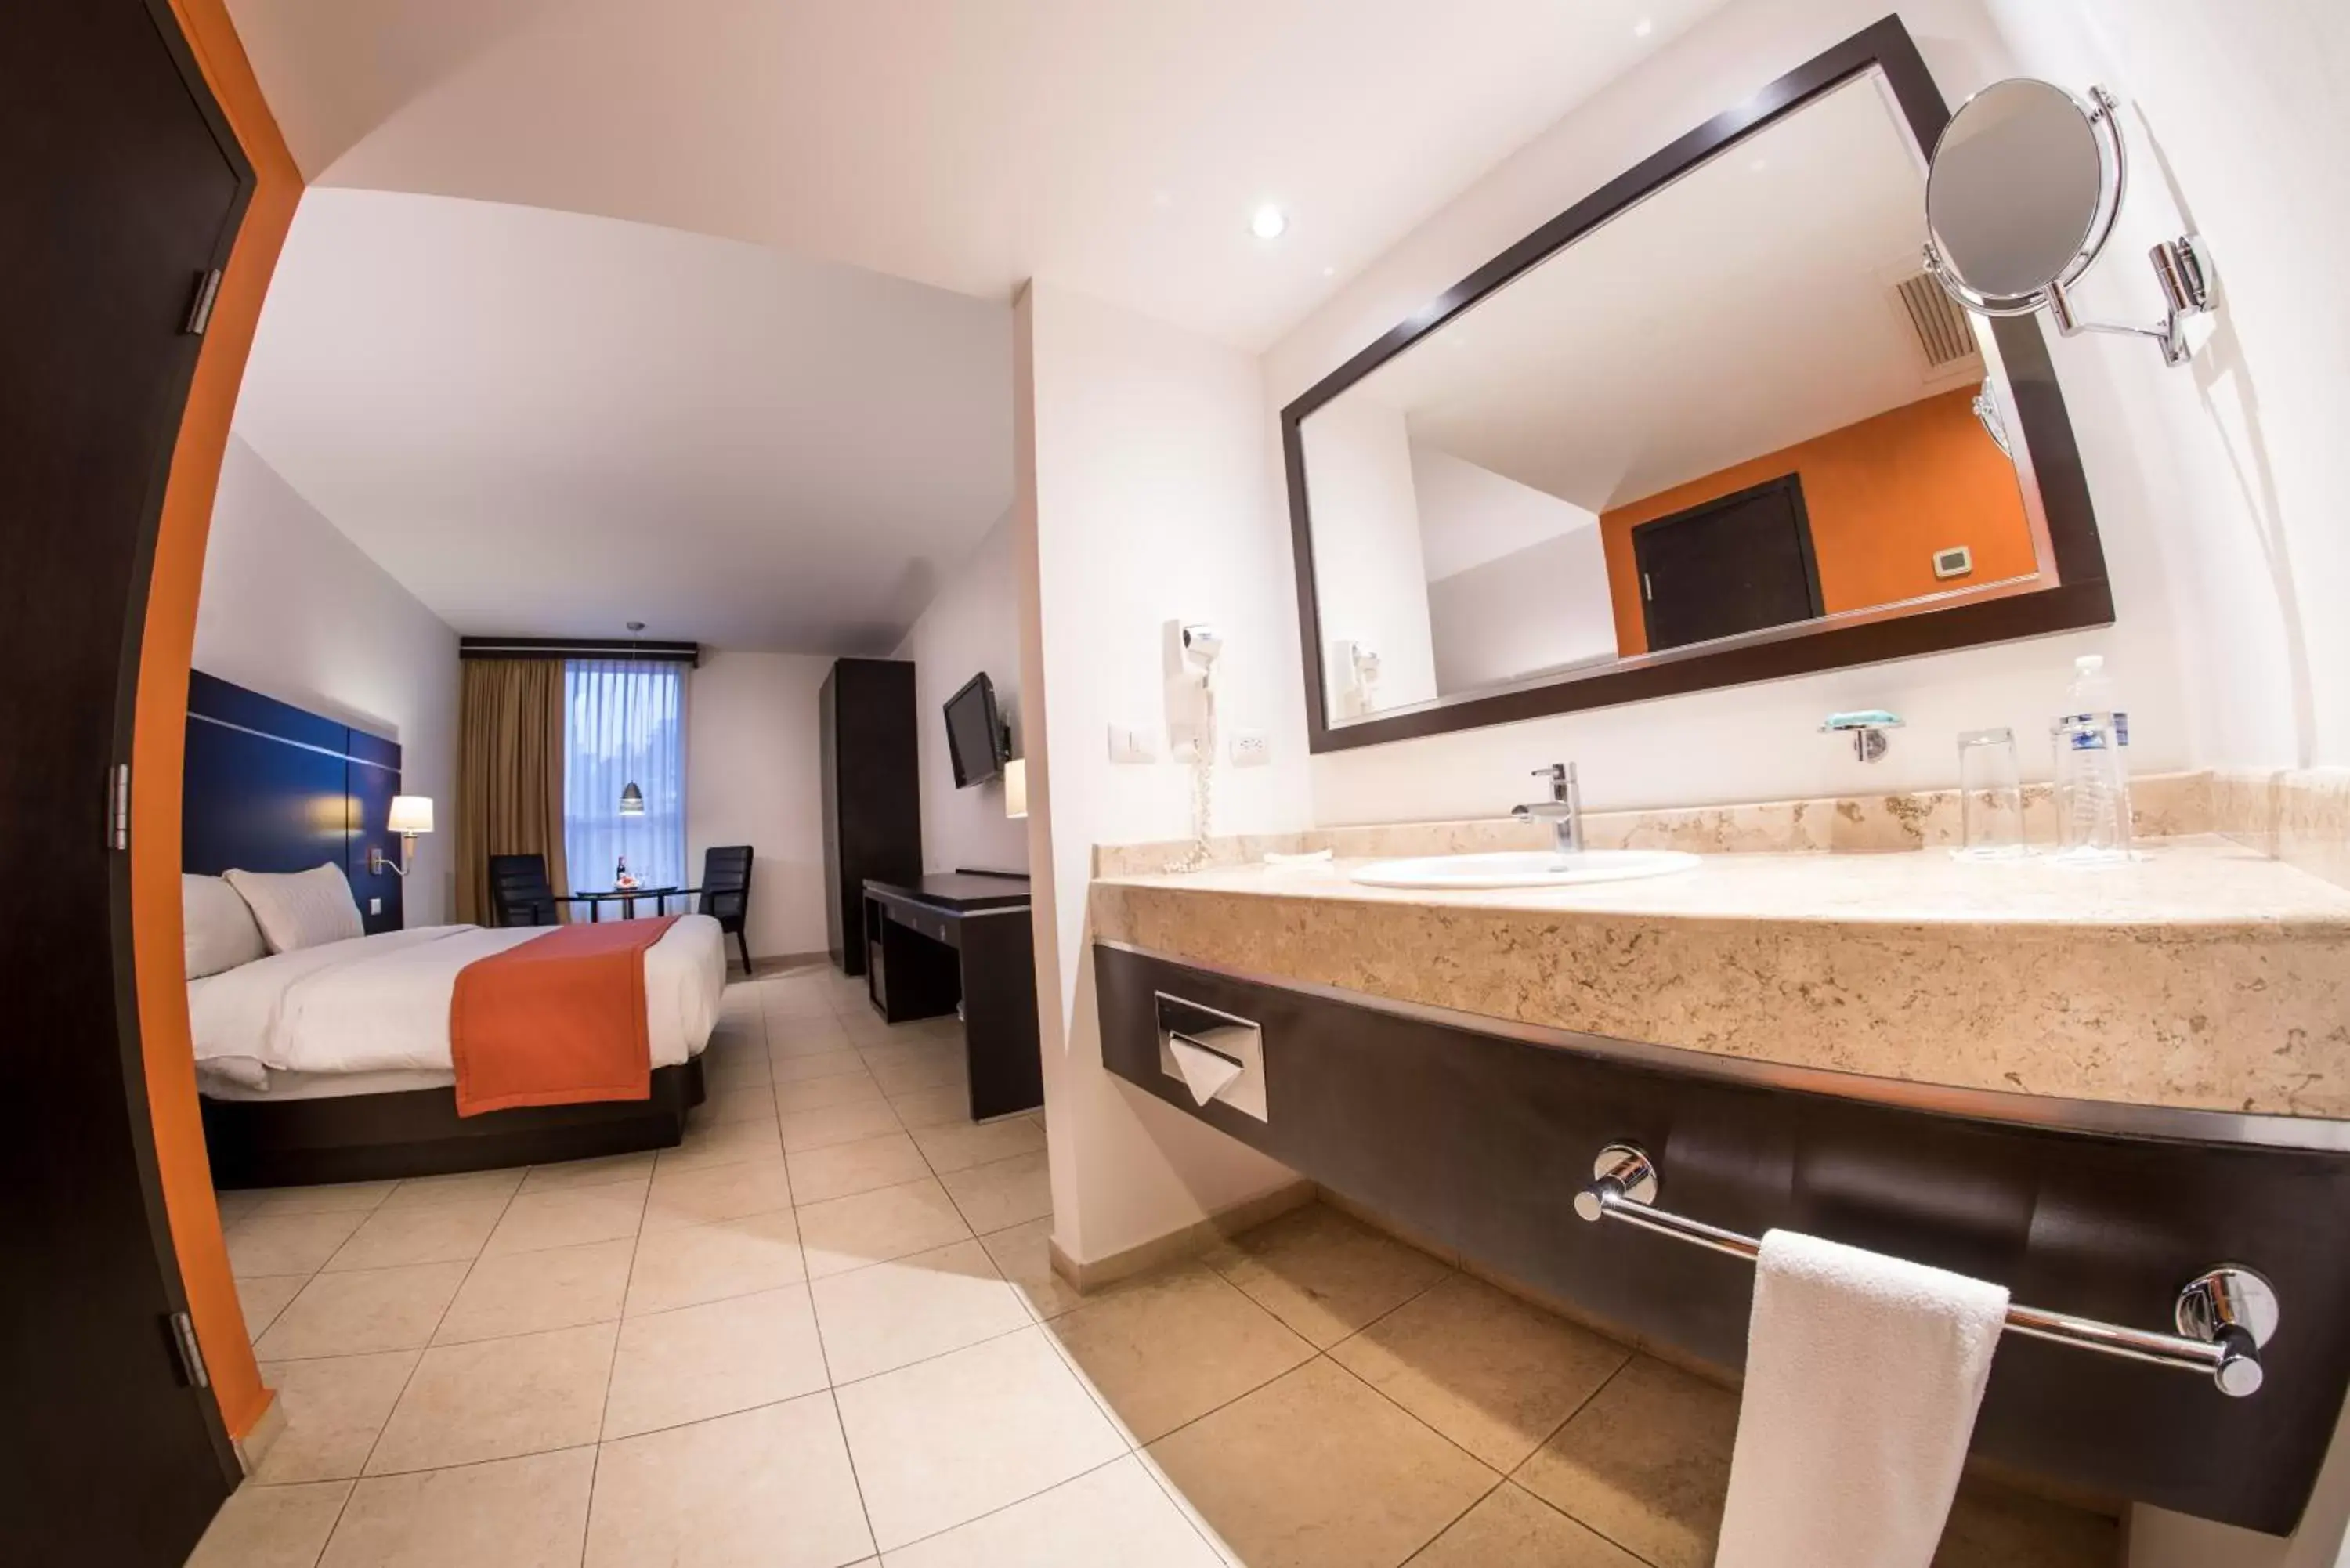 Photo of the whole room, Bathroom in HOTEL OLIBA Boca del Rio